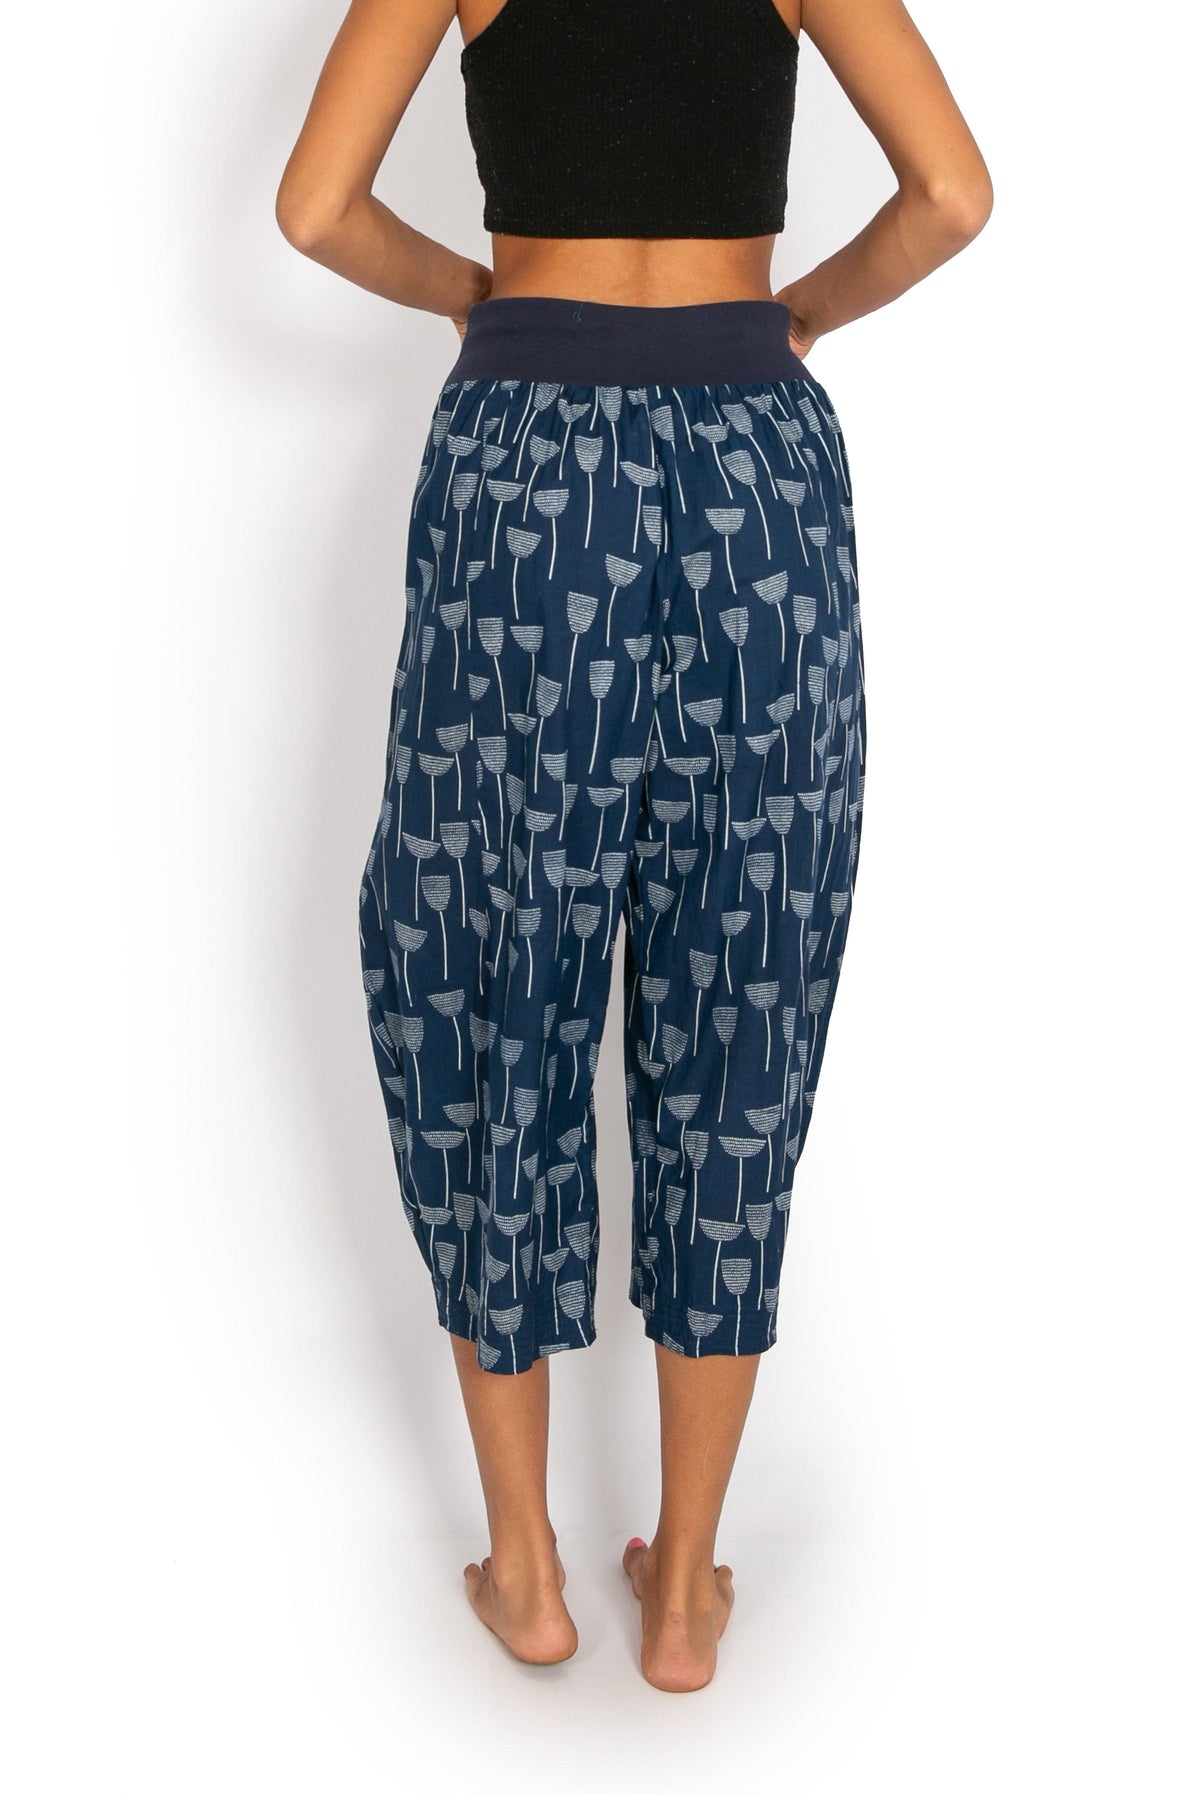 Yoga Pants - Navy Tulips - OM Designs - Splash Swimwear  - May23, new arrivals, new clothing, new womens, OM Designs, pants, women clothing - Splash Swimwear 